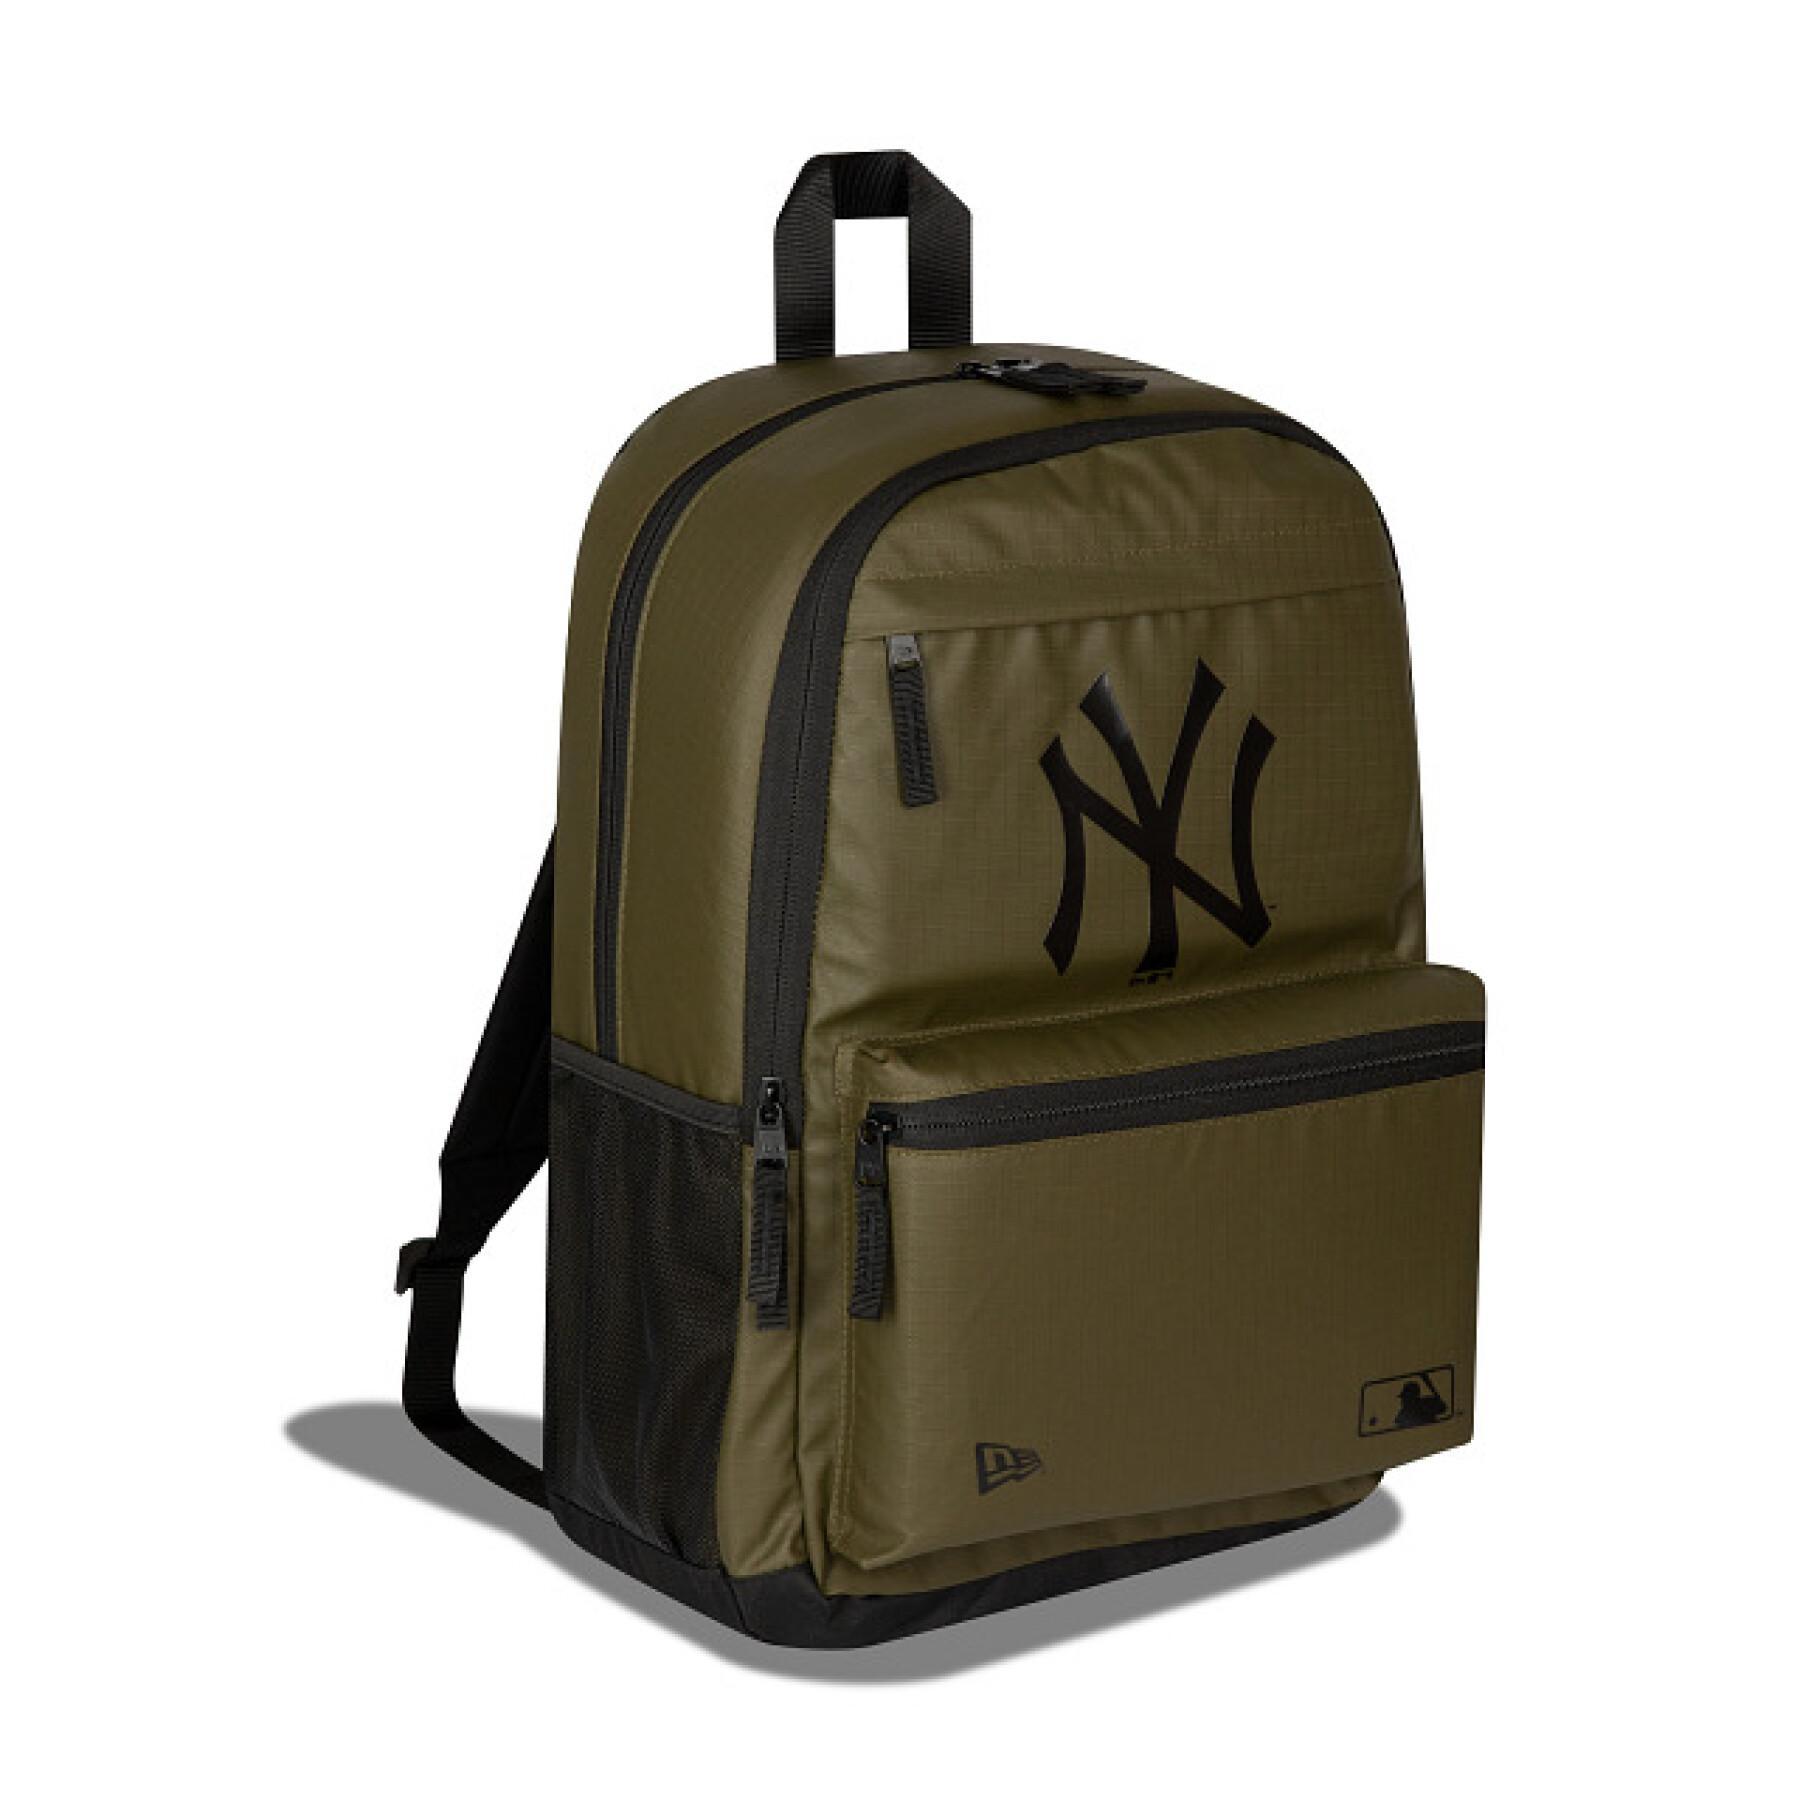 Backpack New York Yankees Cntmpry Delaware